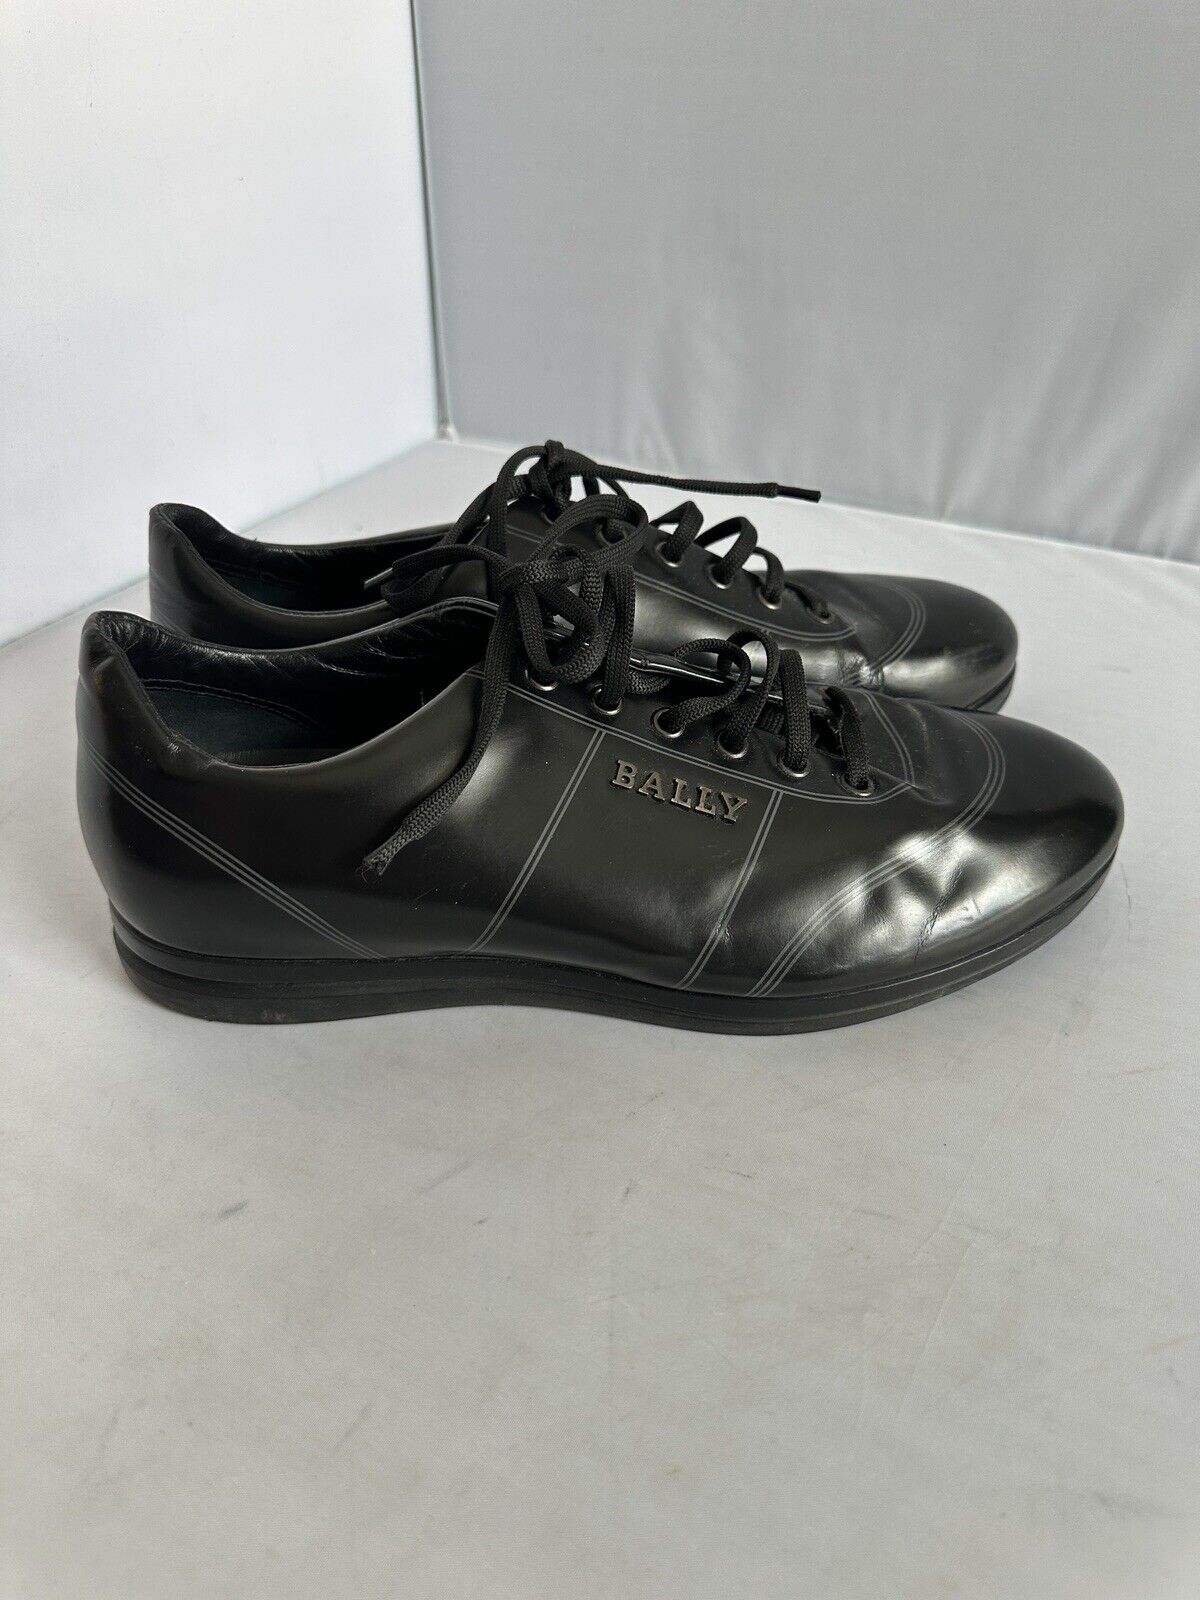 BALLY Svid Kallan Black Leather shoes UK  7 E/ US Men’s 8D Swiss Made.